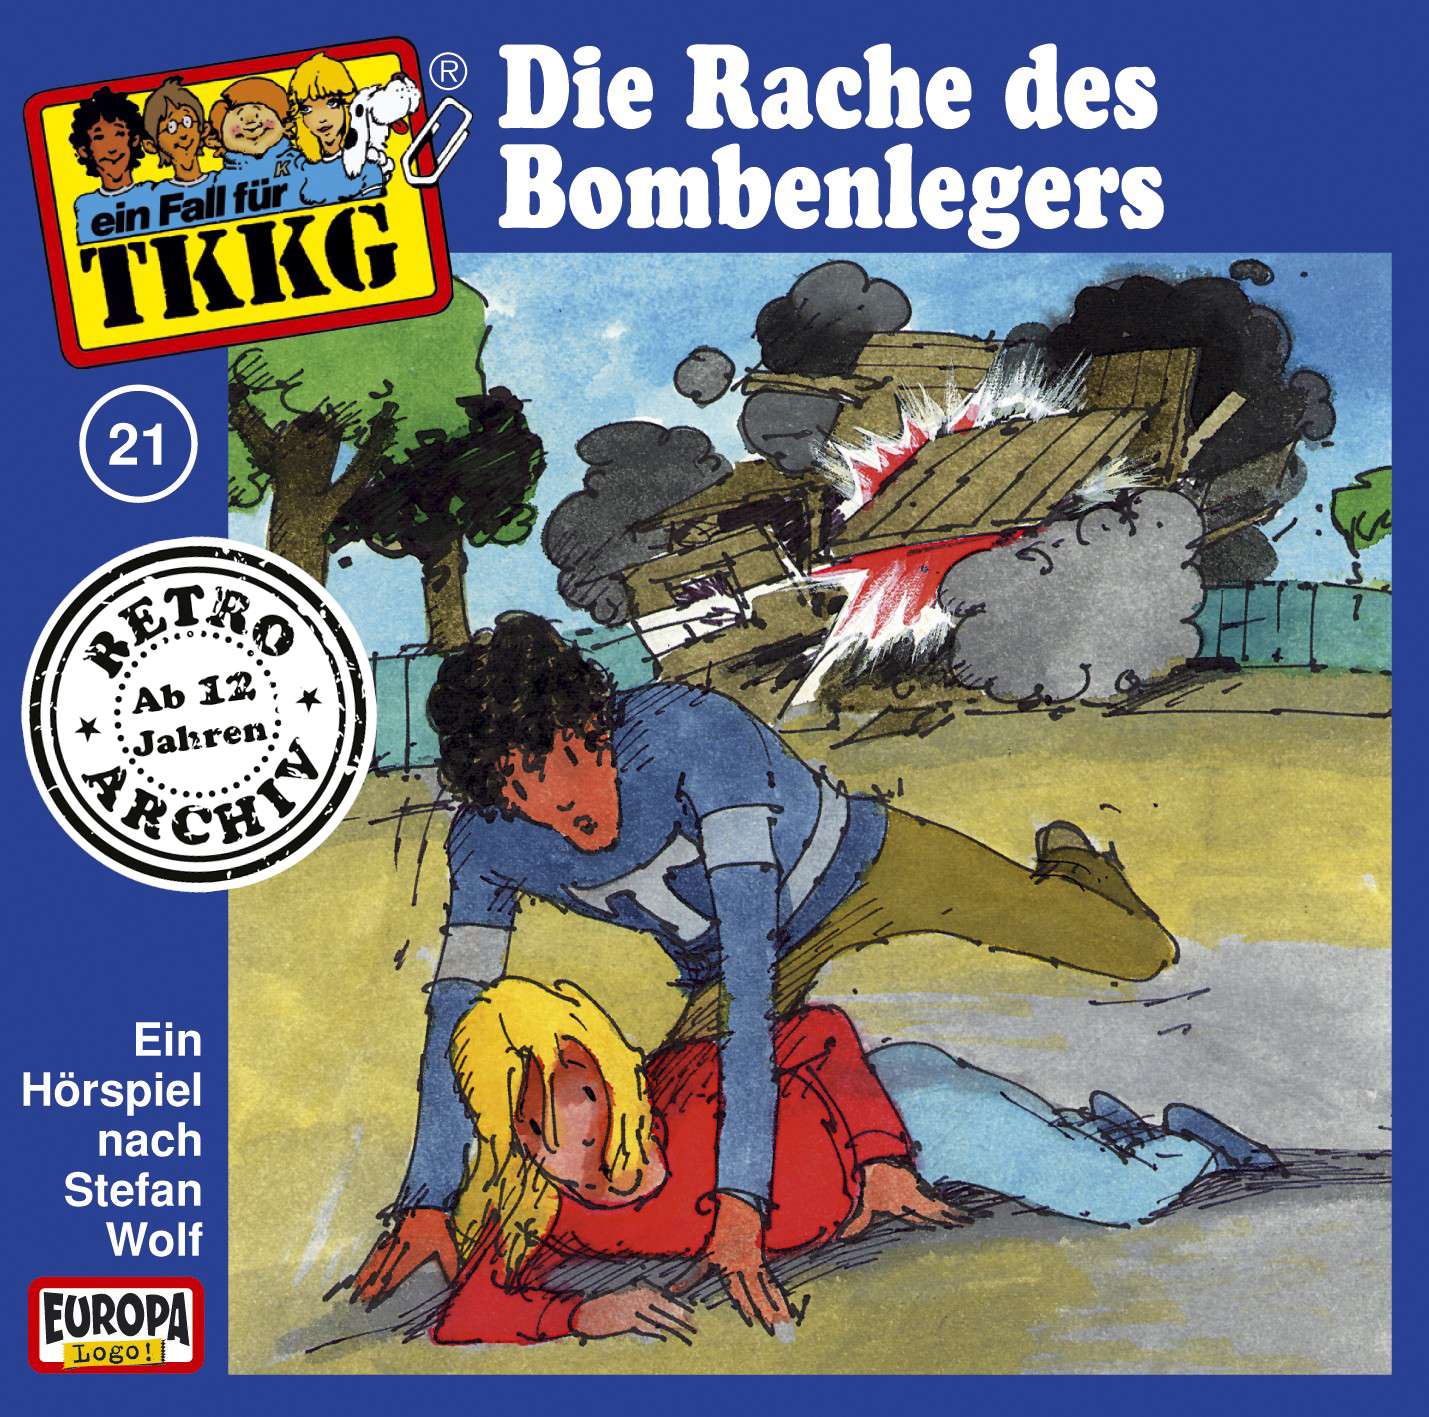 TKKG Retro-Archiv: Die Rache des Bombenlegers